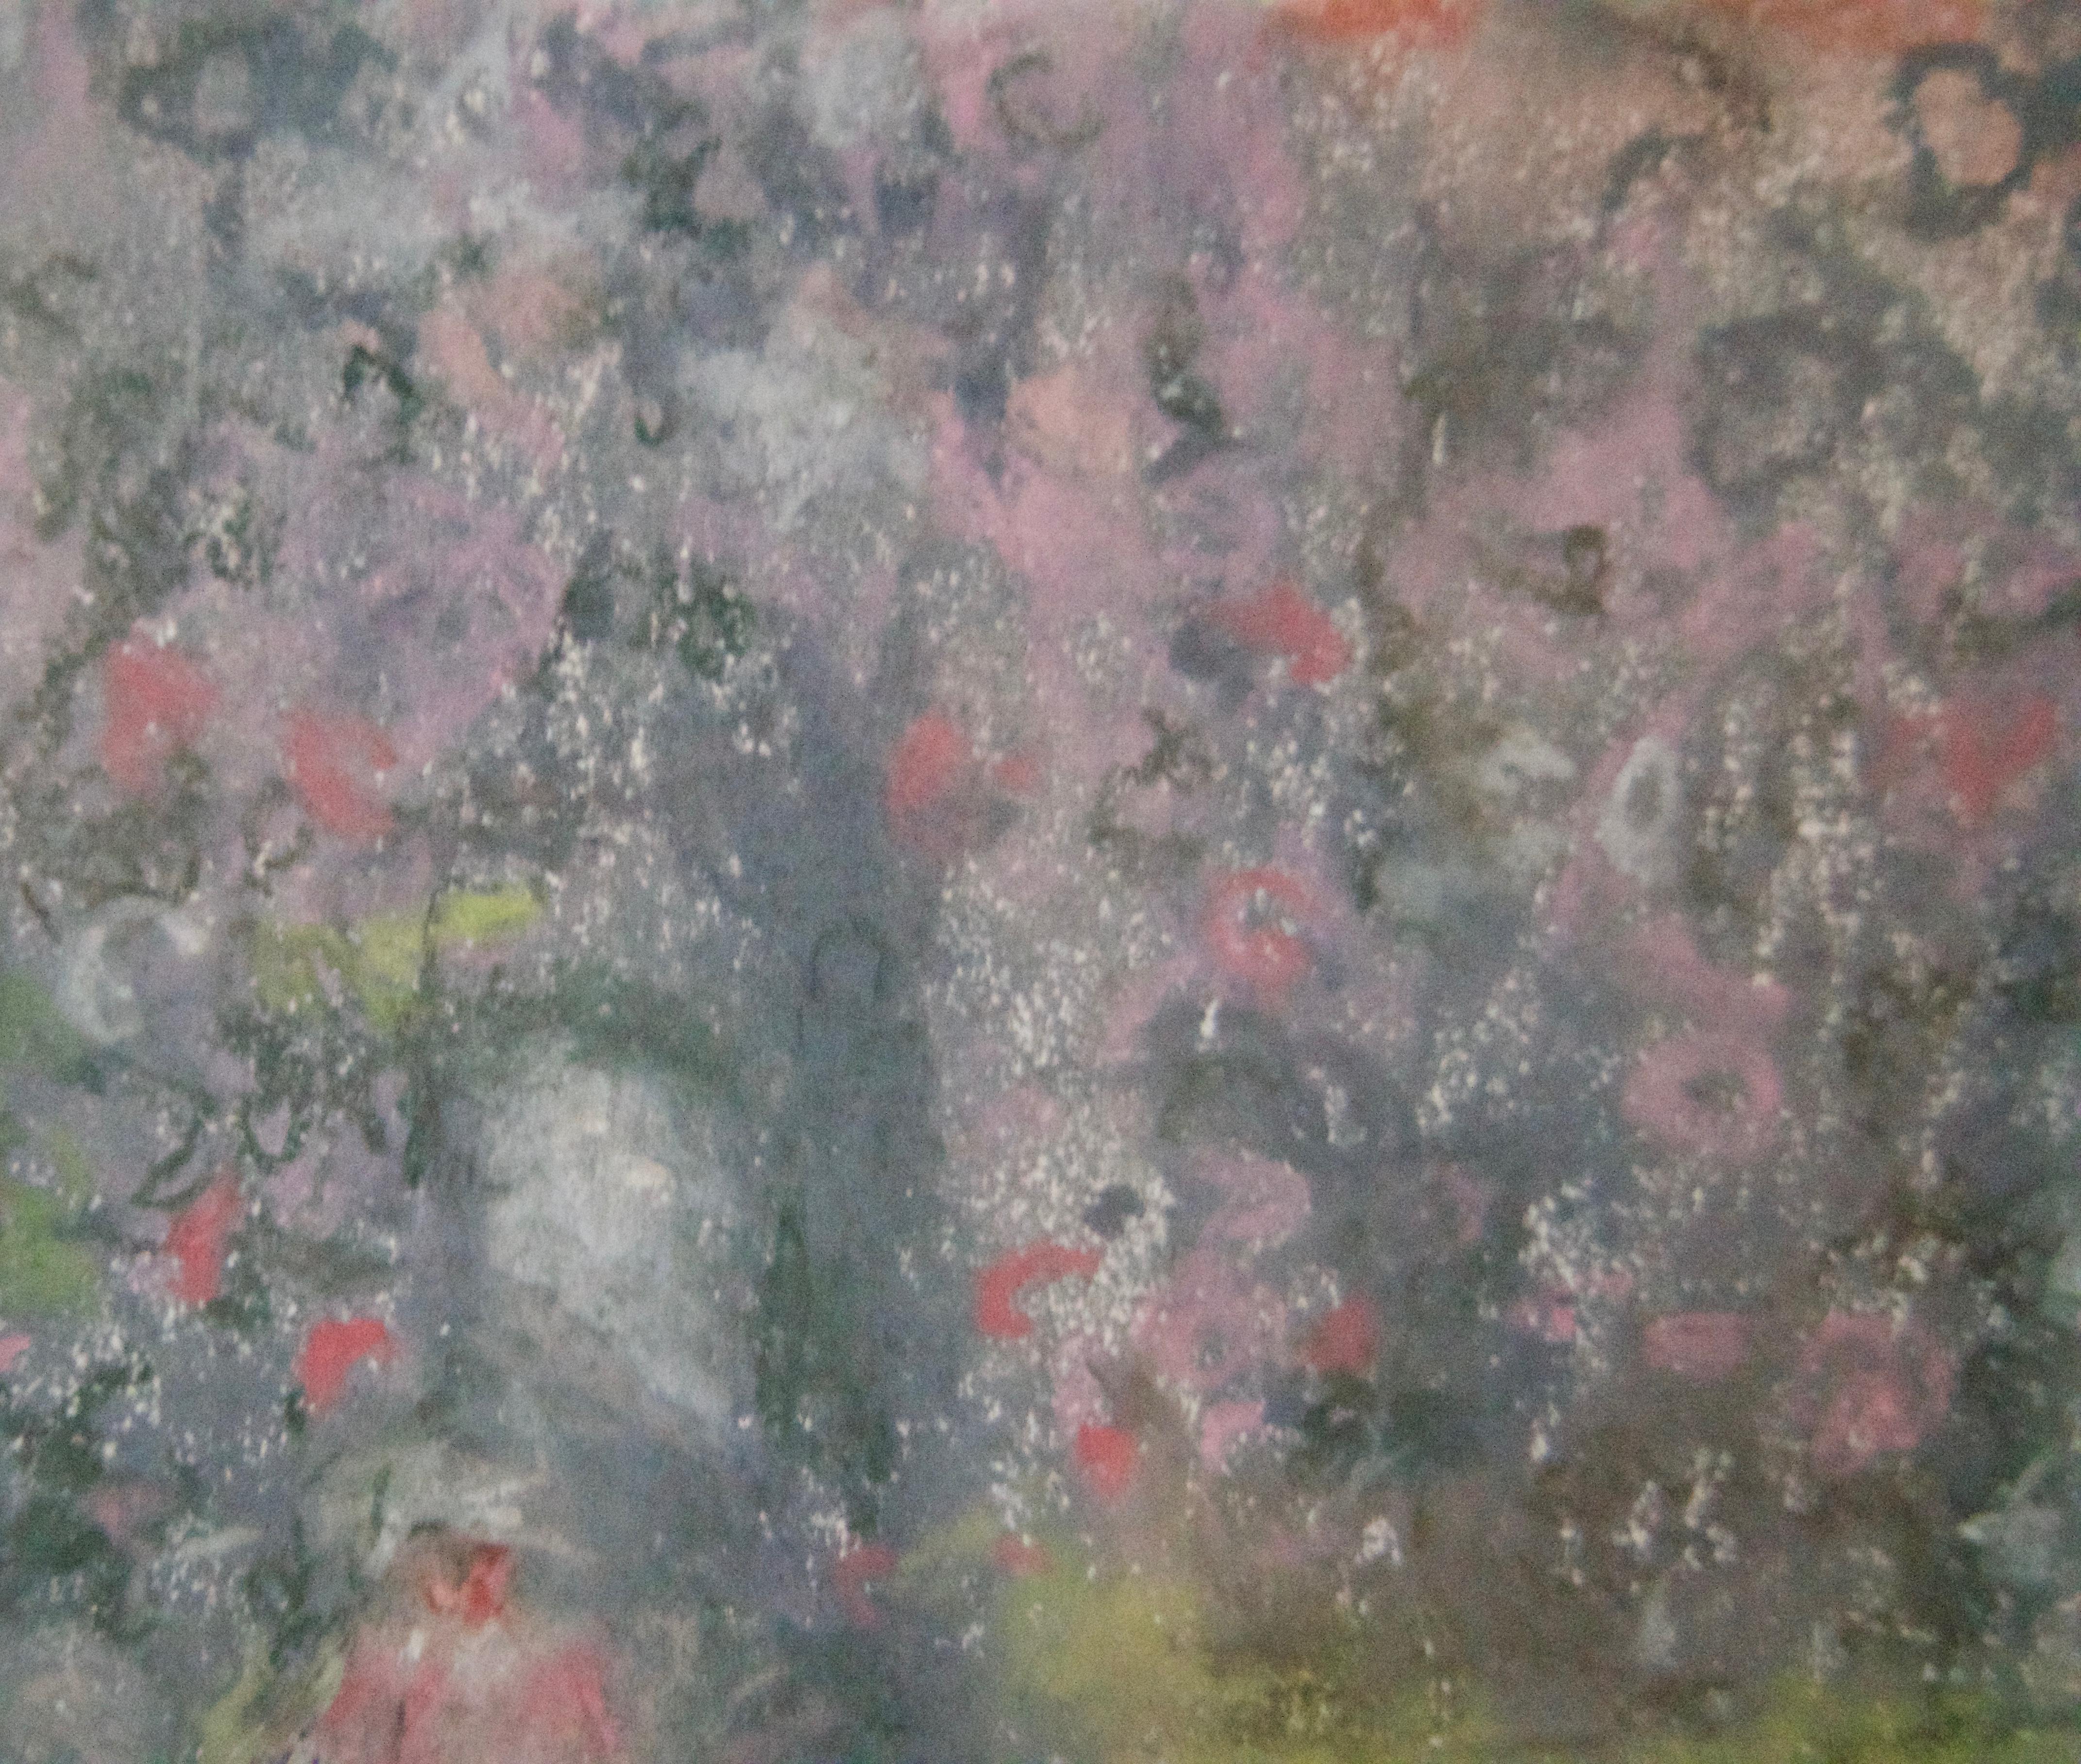 Into the Garden - Mid 20th Century Impressionist Oil Pastel by William Mason 1